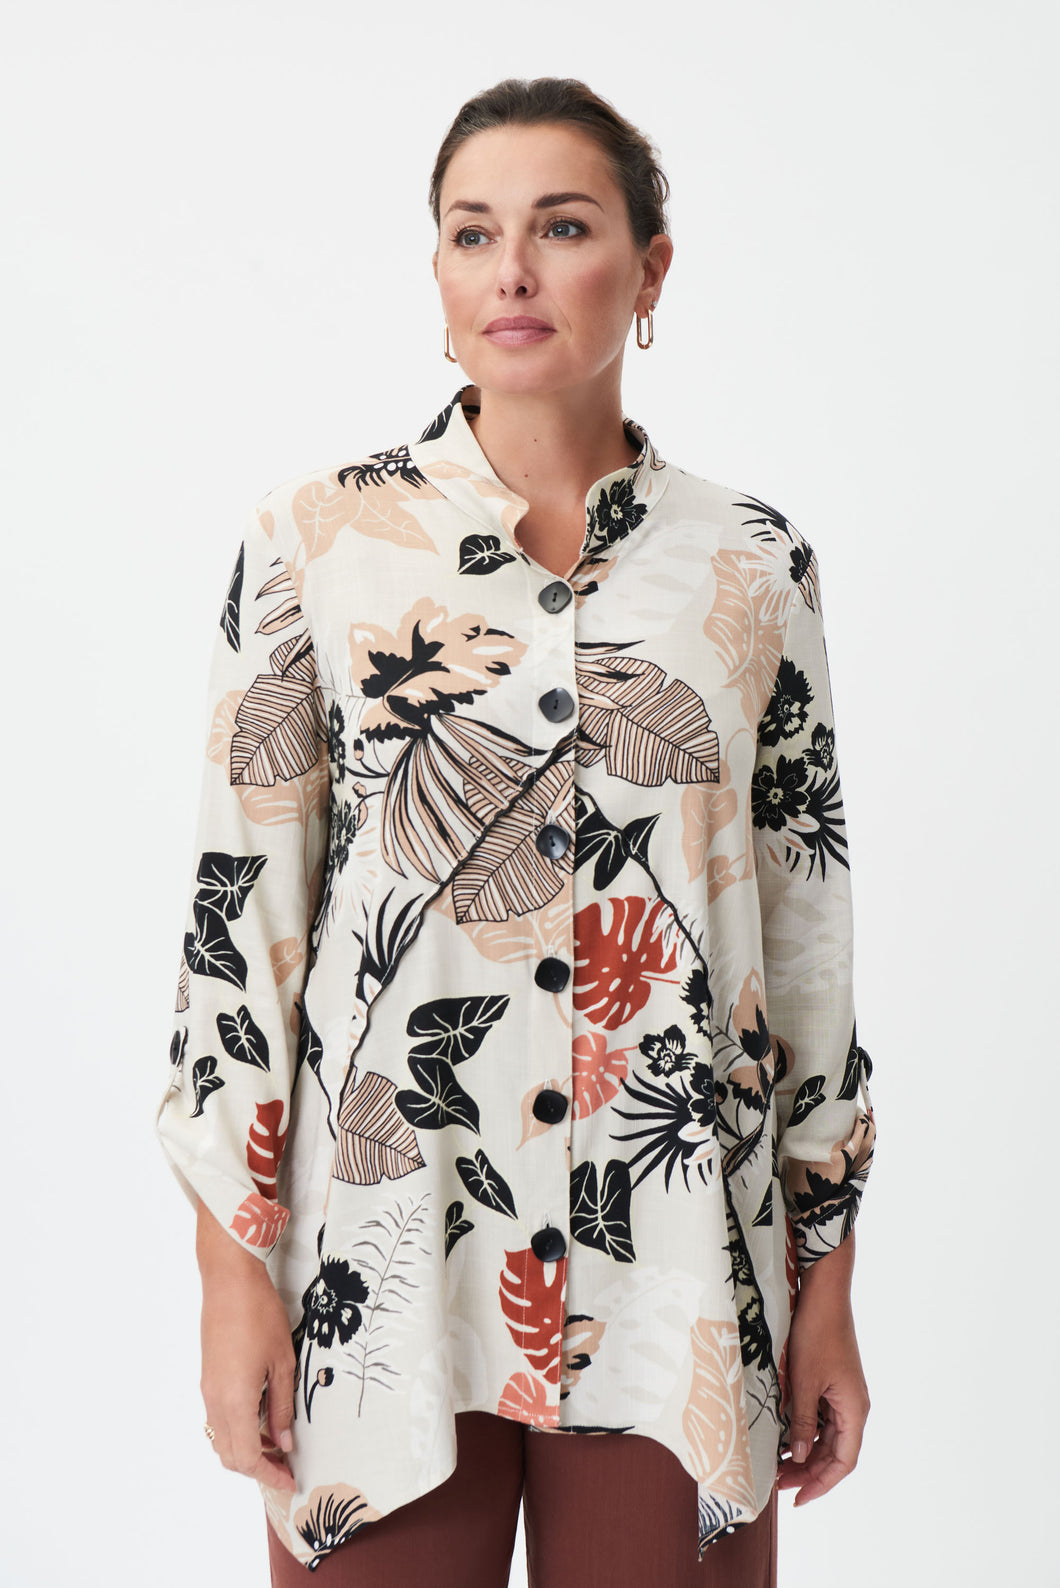 SALE  Joseph Ribkoff  Autumn Floral Print Tunic Shirt  -  Size: 14